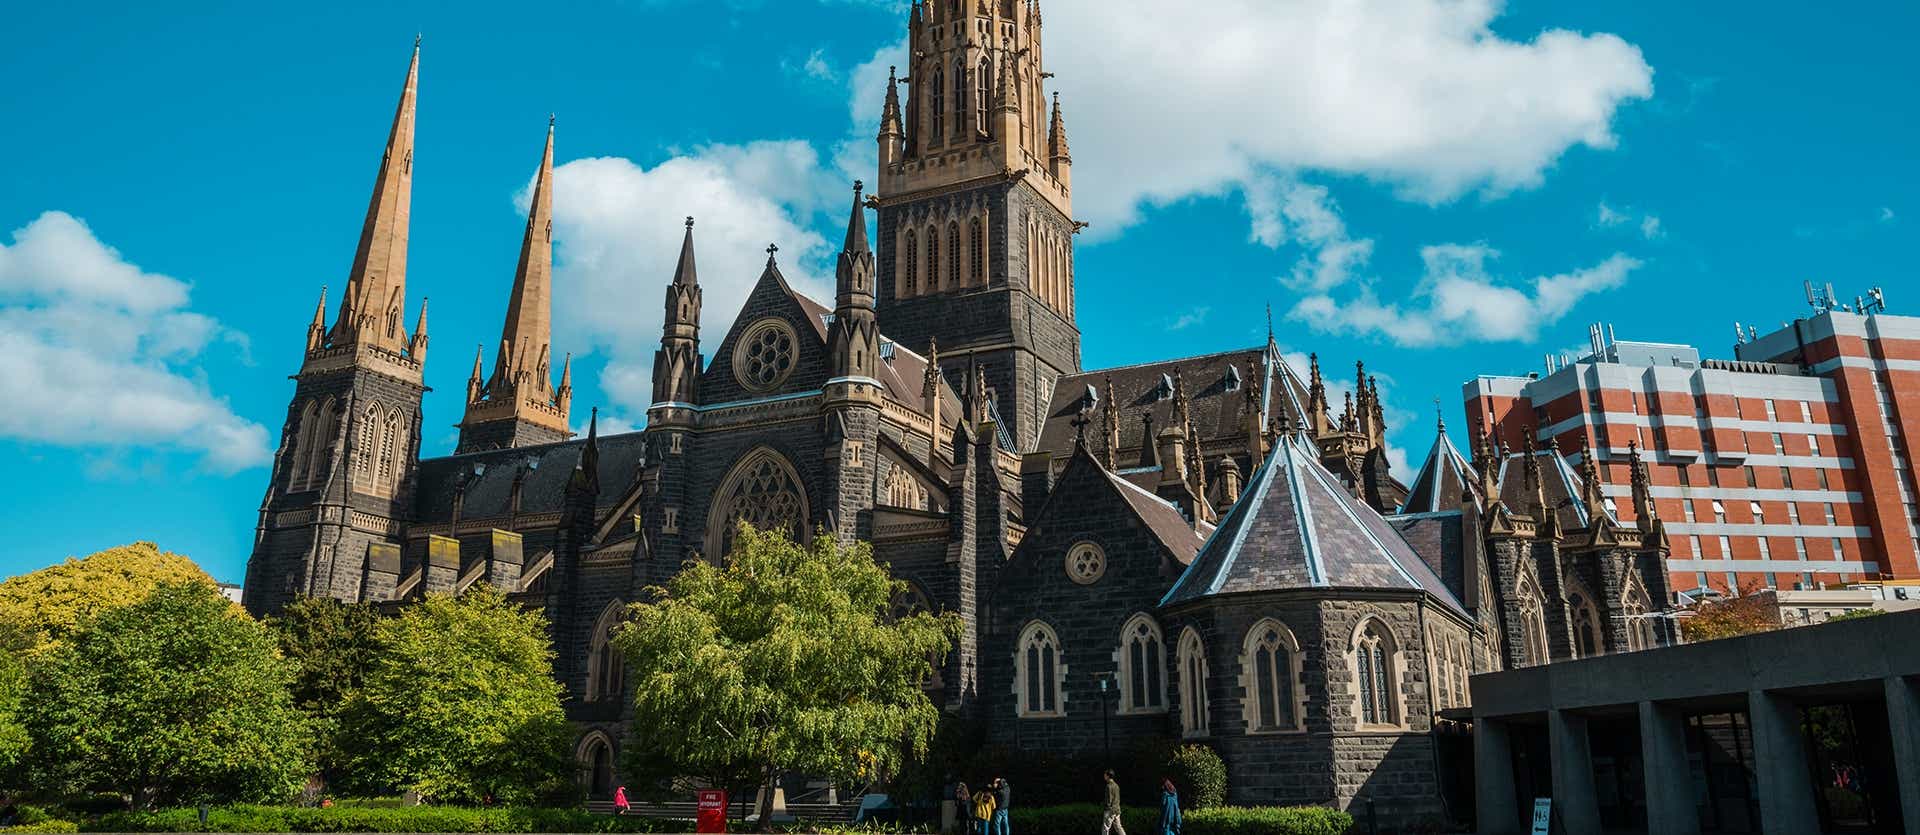 St.-Patrick-Kathedrale <span class="iconos separador"></span> Melbourne <span class="iconos separador"></span> Australien